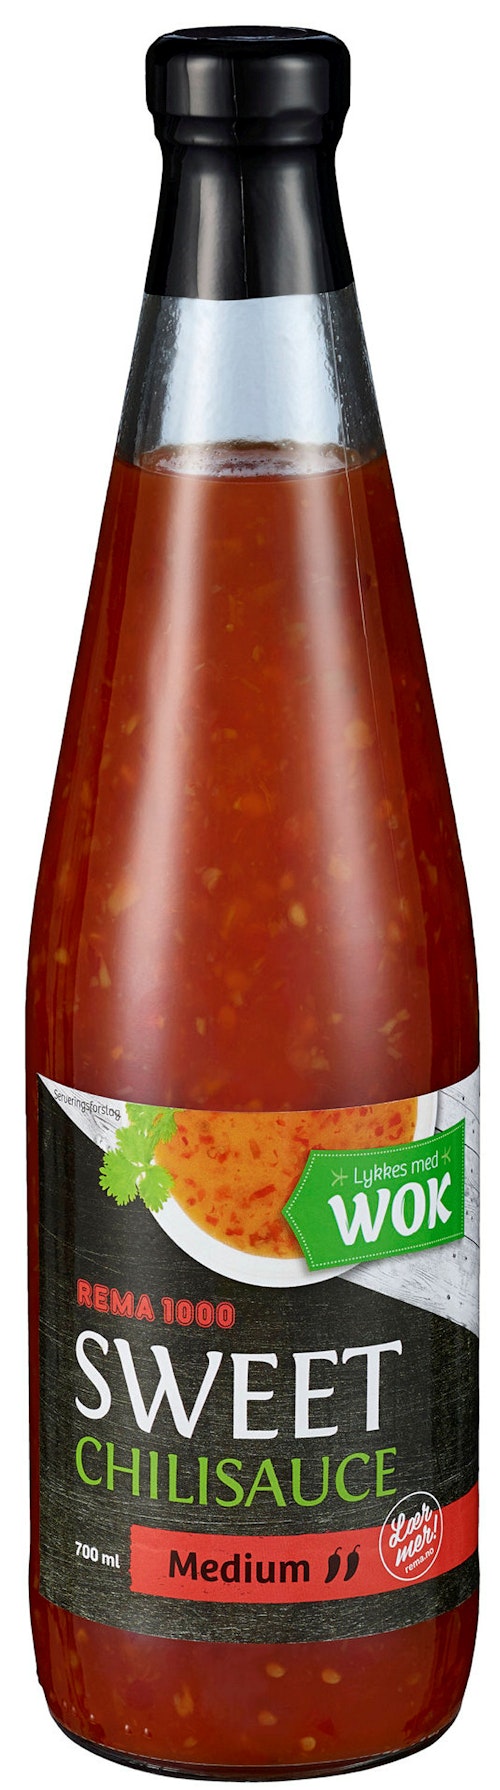 REMA 1000 Sweet Chili Saus 700 ml